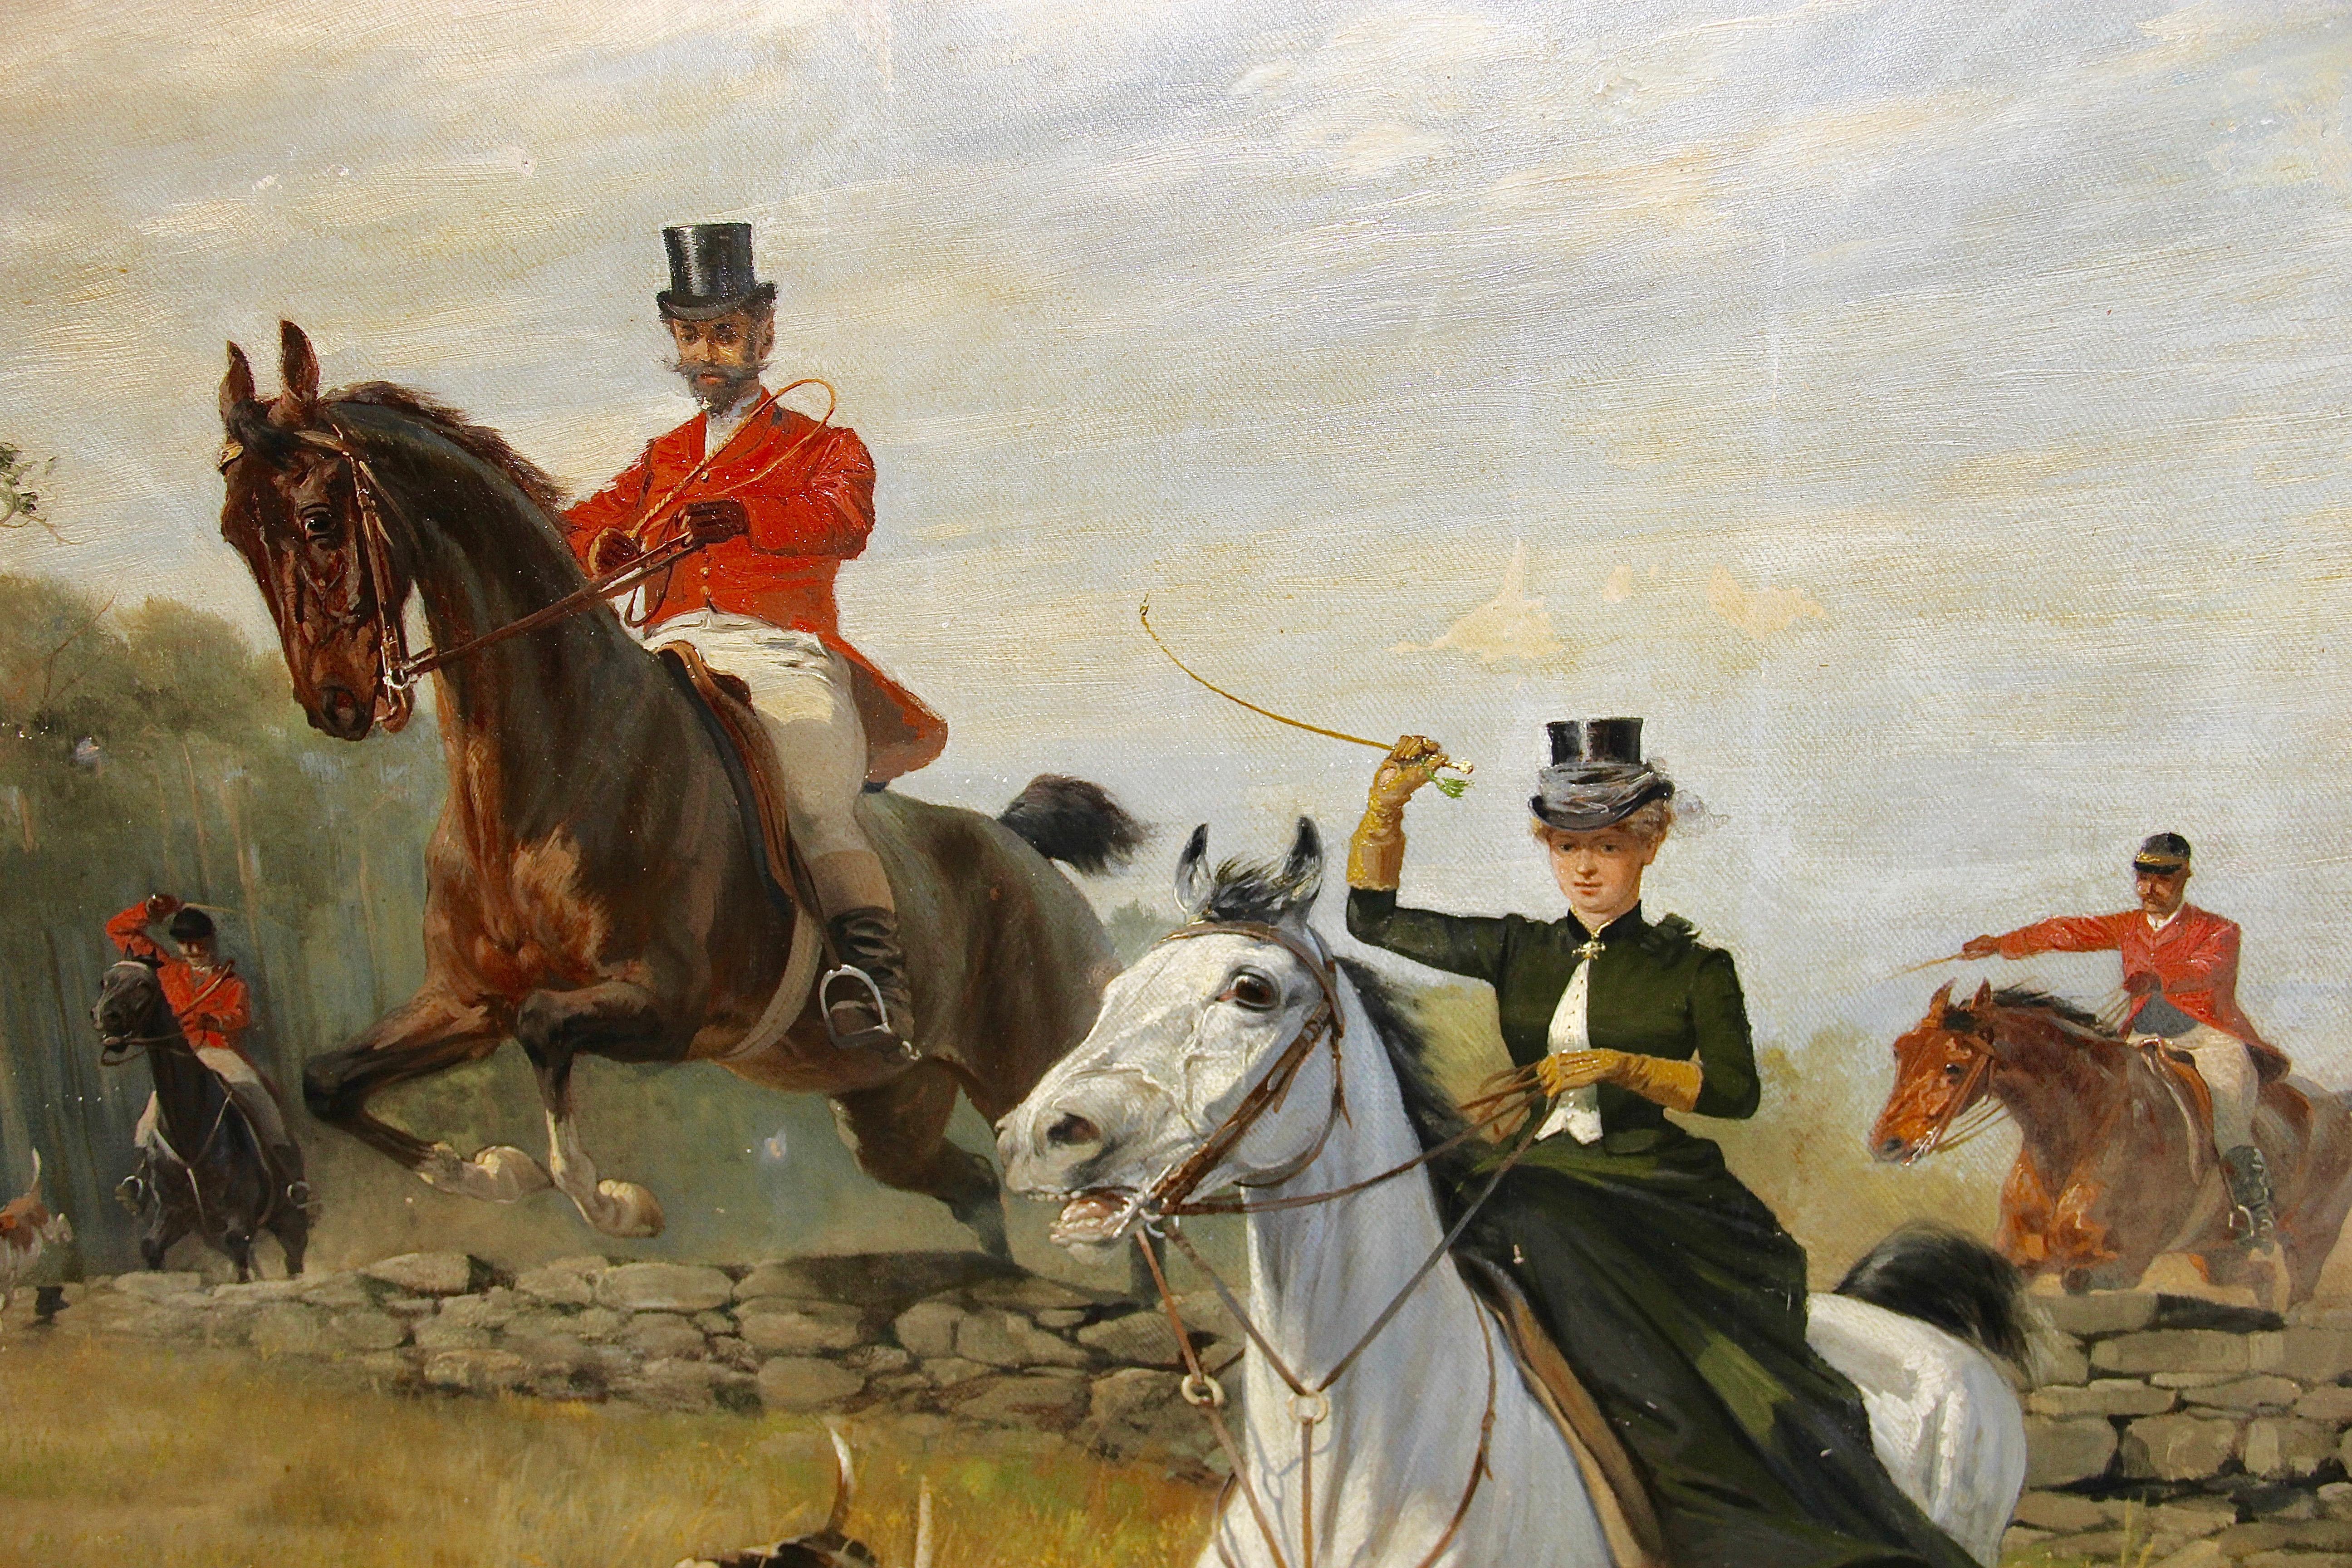 Large, impressive oil painting. Hunting scene. 19th century. 